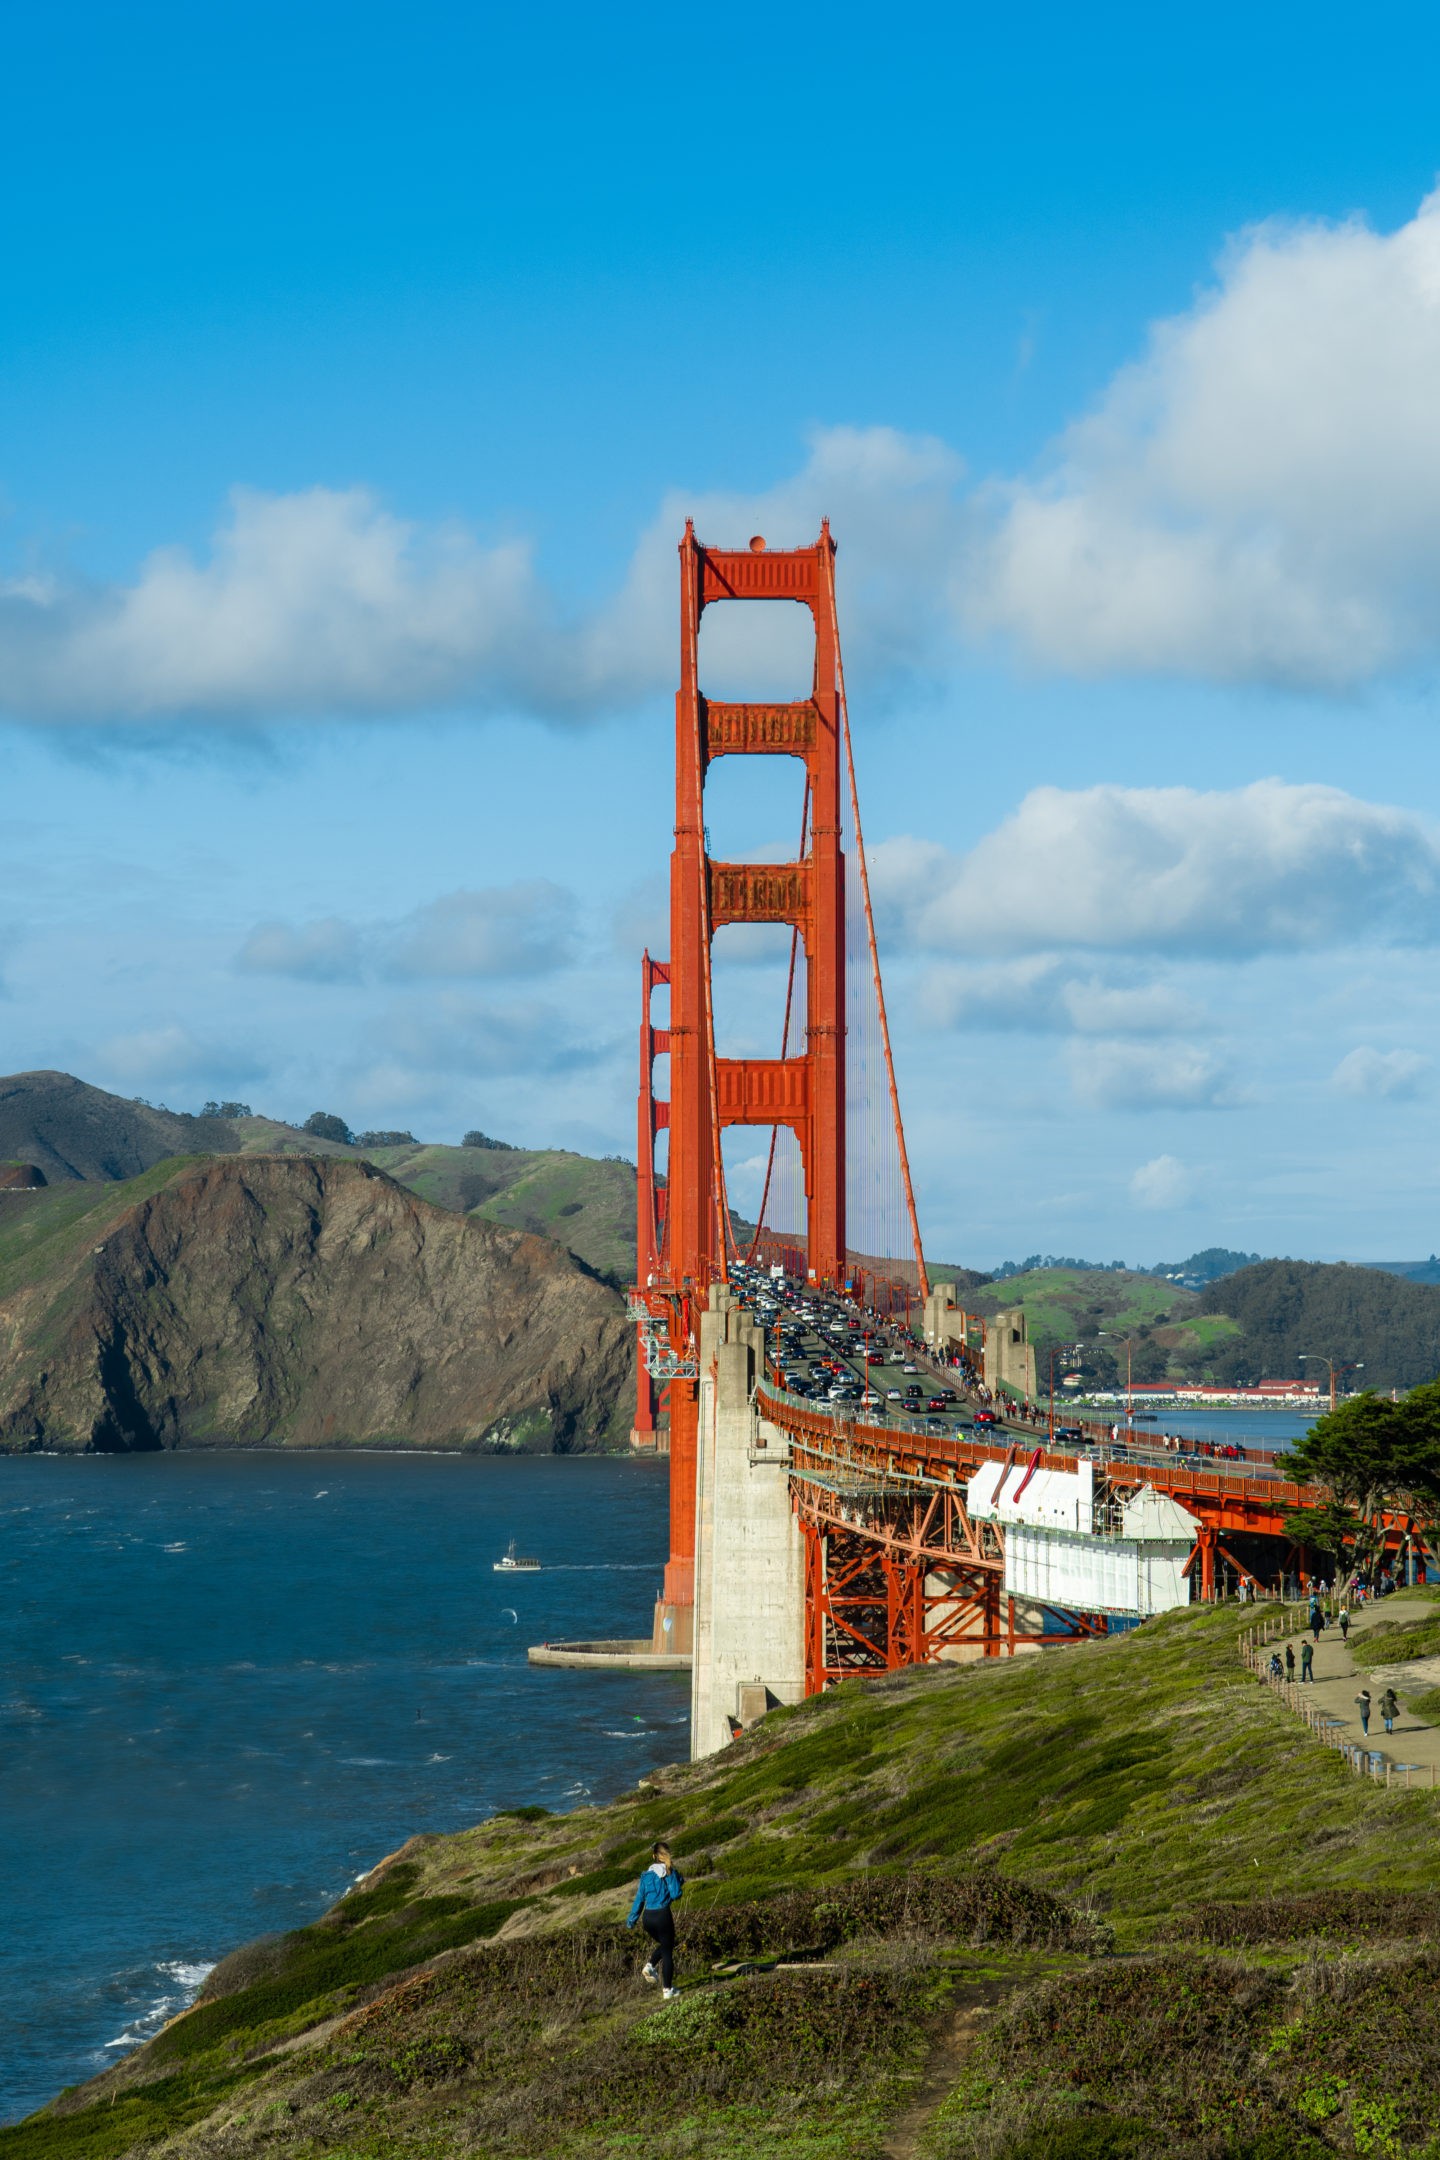 Shot of the Golden Gate Bridge